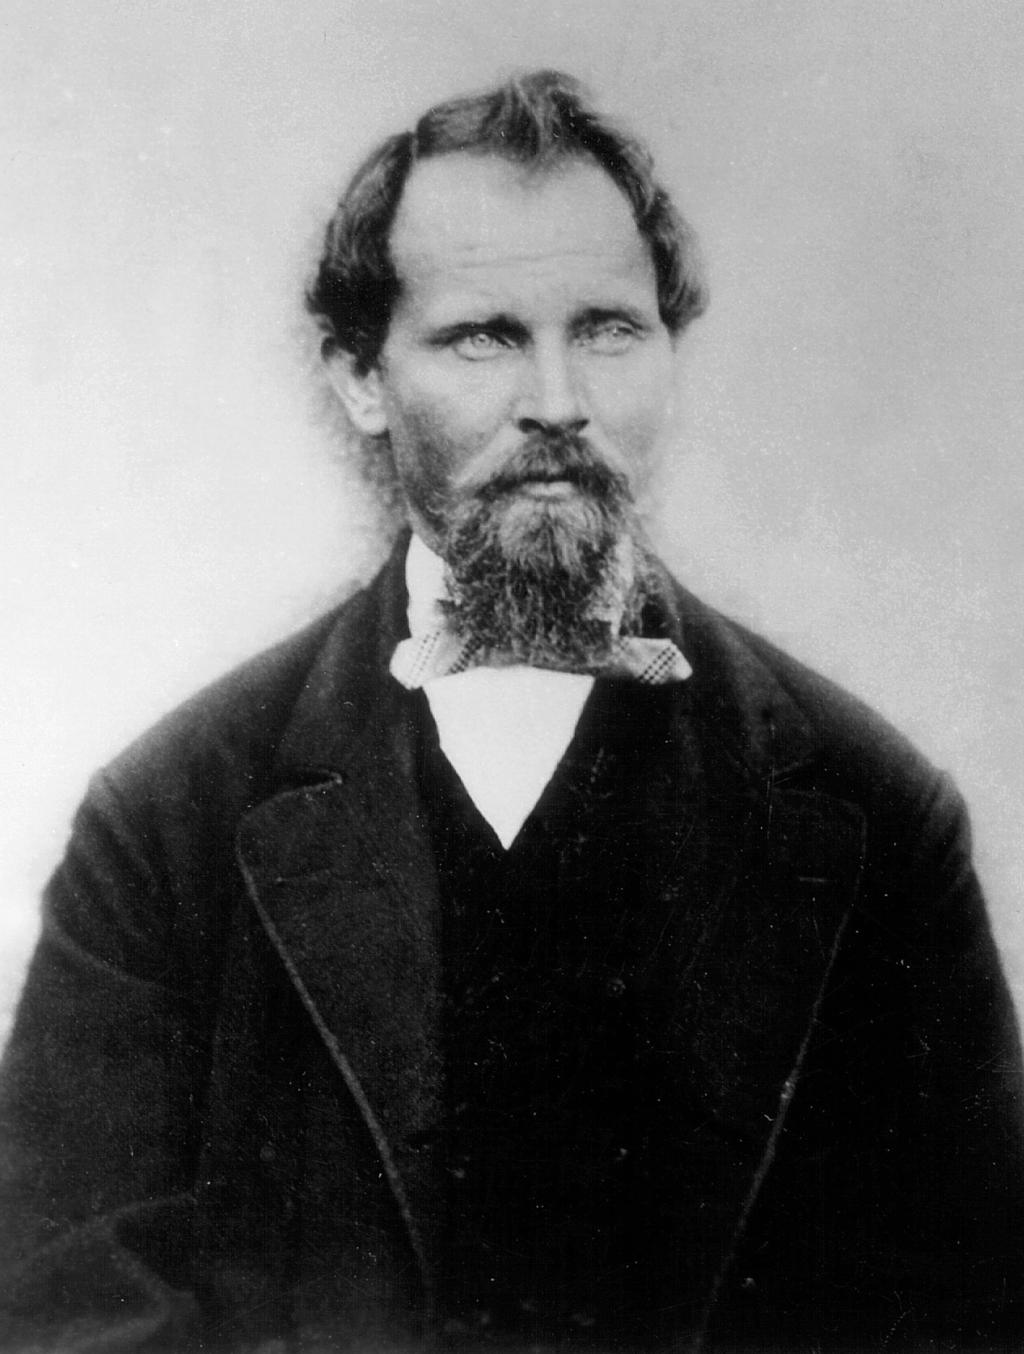 John Stevenson was one of the original settlers at Cape Horn in 1853.